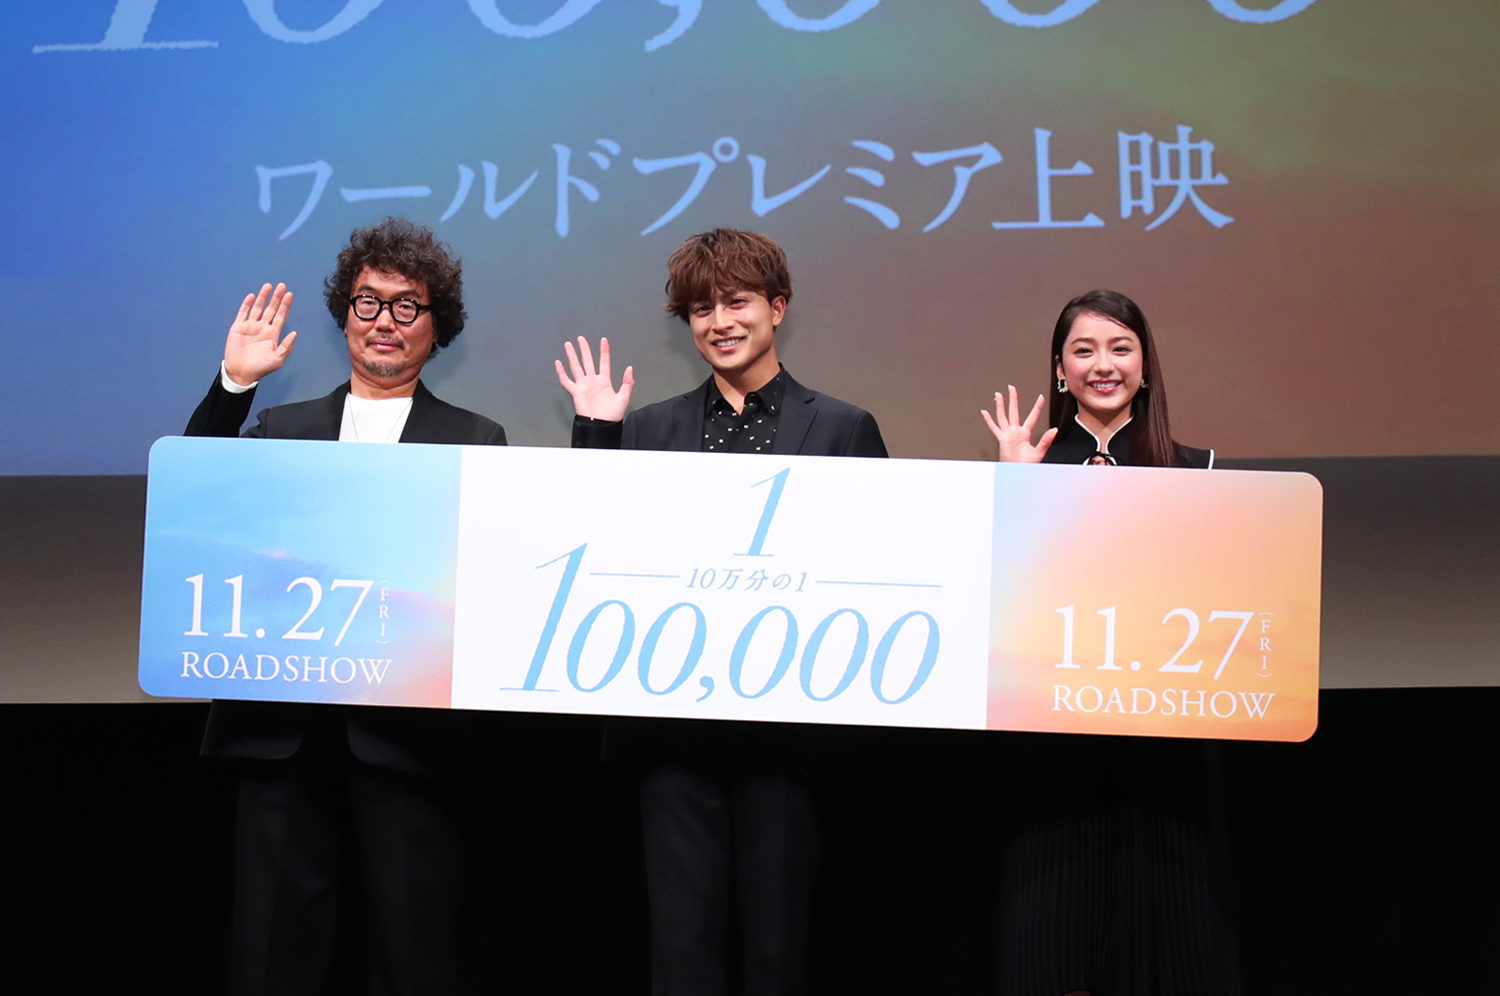 One in a Hundred Thousand(SA) Alan Shirahama (Actor), Yuna Taira (Actress), Koichiro Miki (Director)